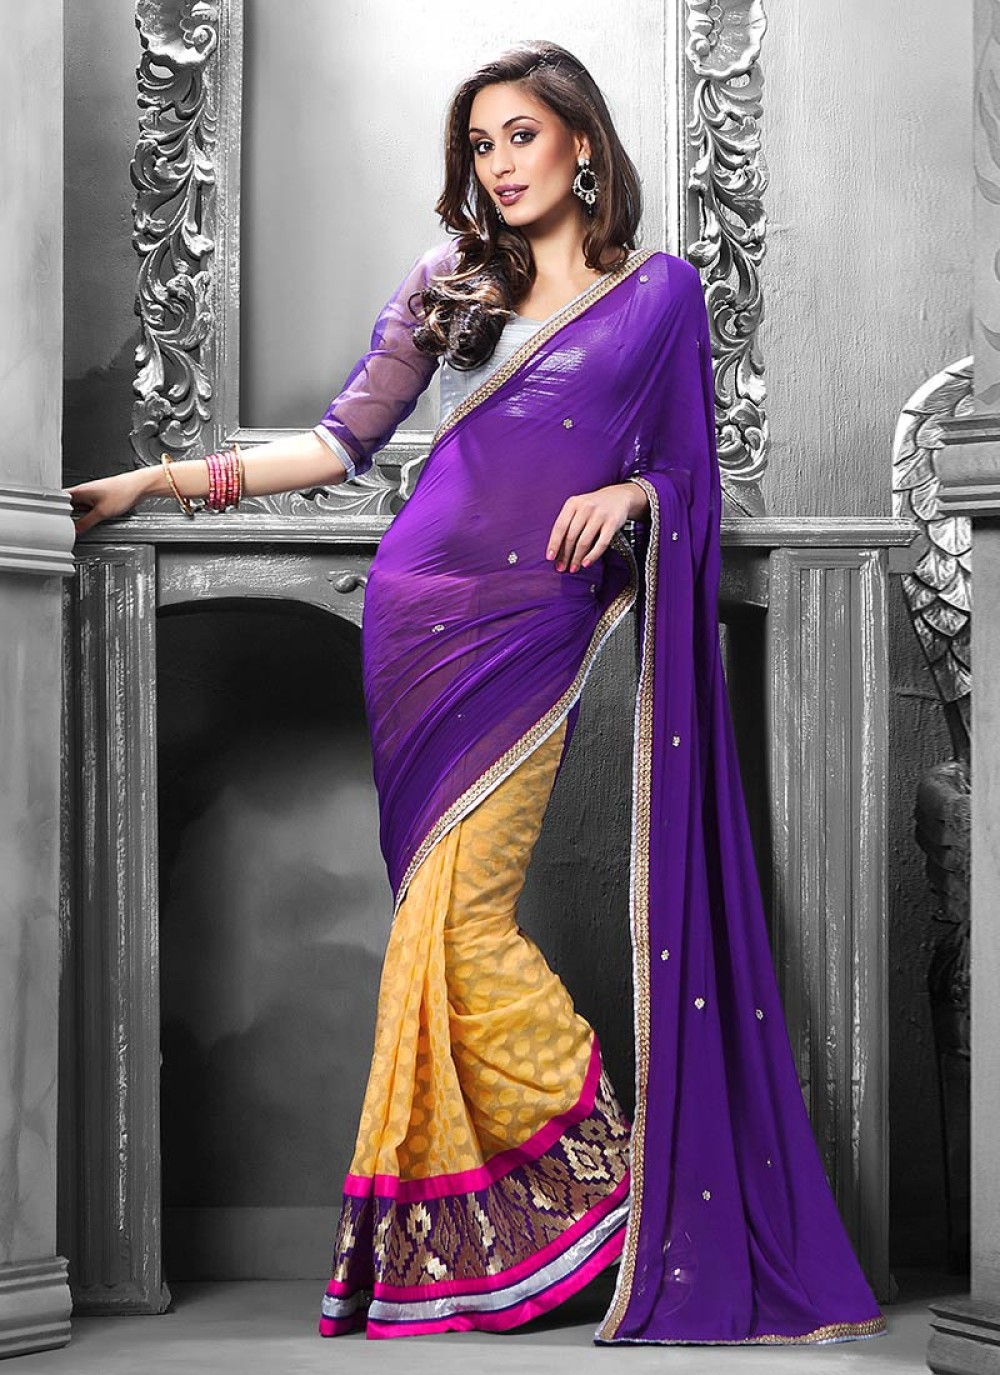 Purple & Violet Colored Sarees in Plain & Designer Styles